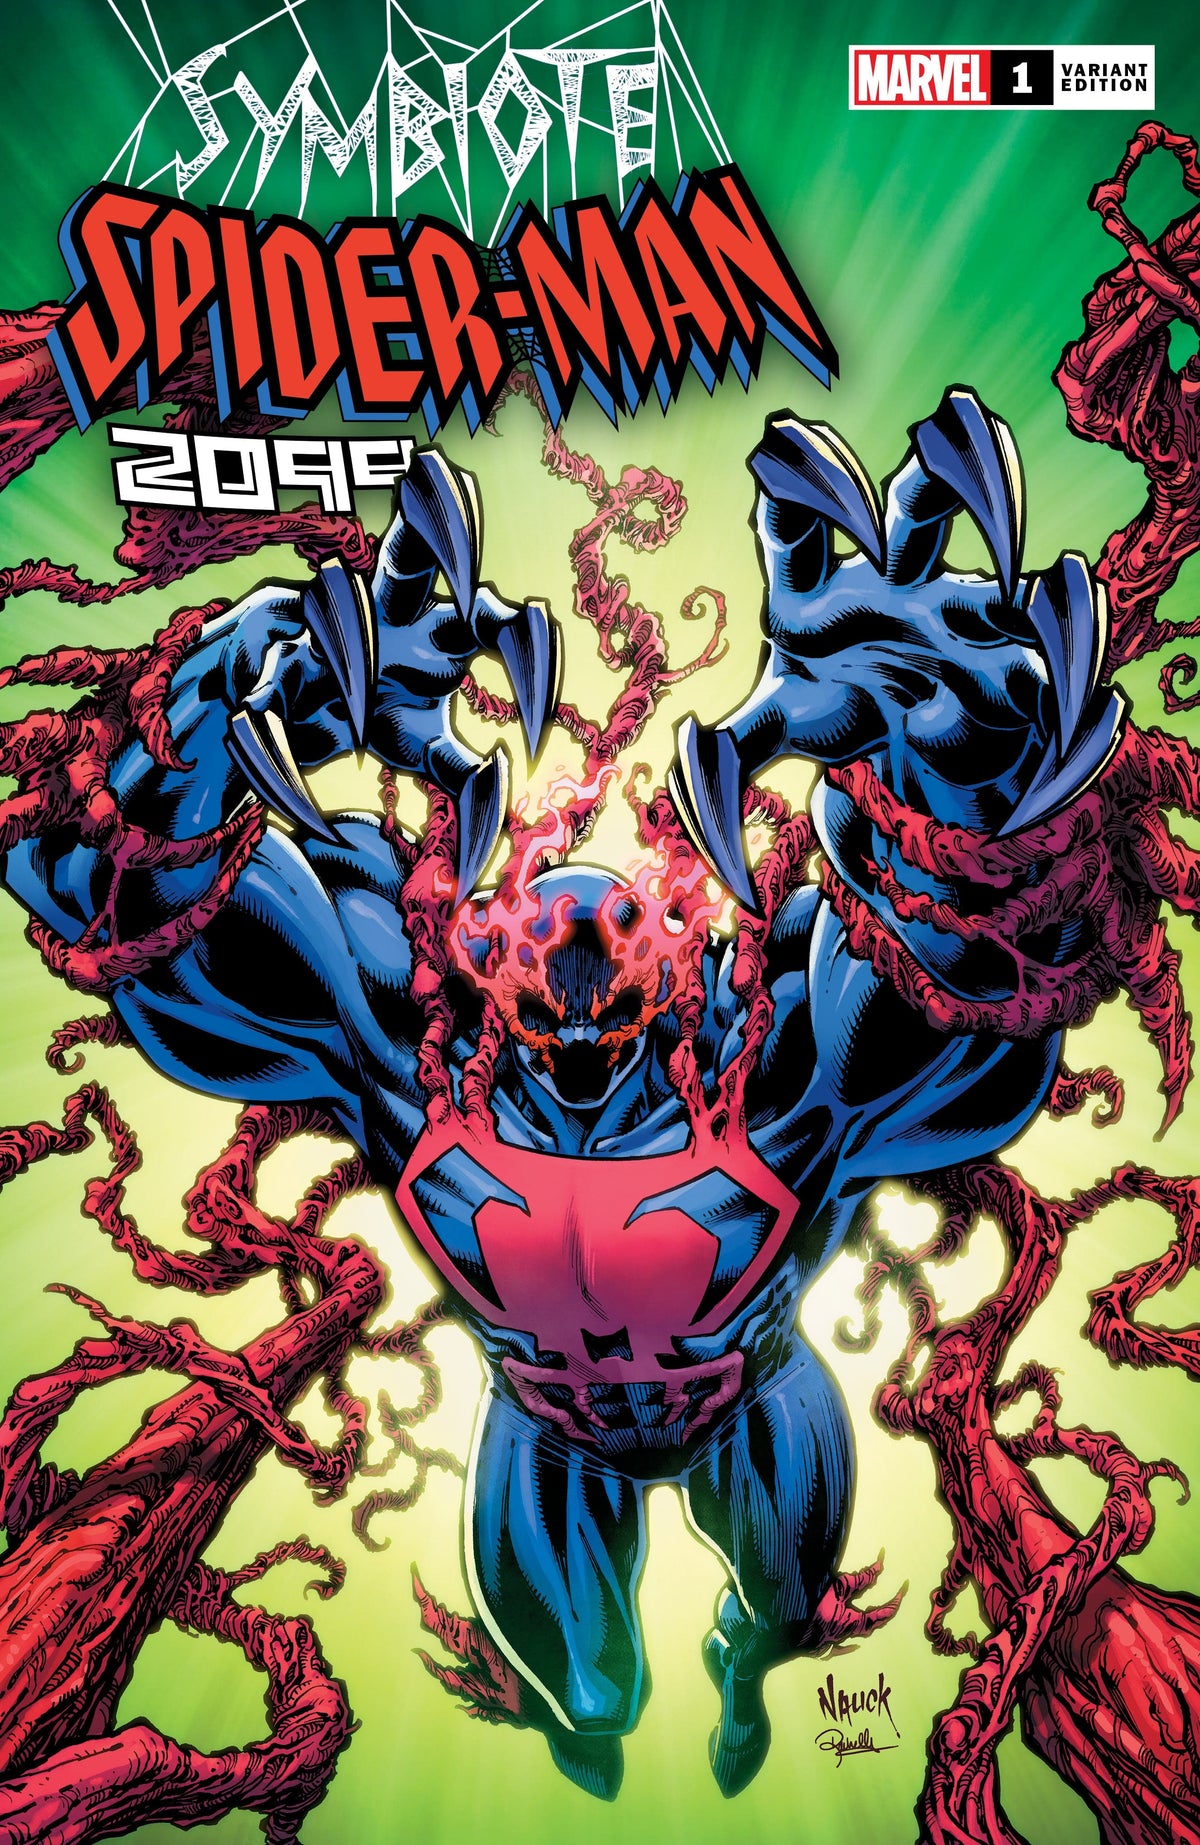 Symbiote Spider-Man 2099 #1 Hero Initiative Exclusive Todd Nauck Variant